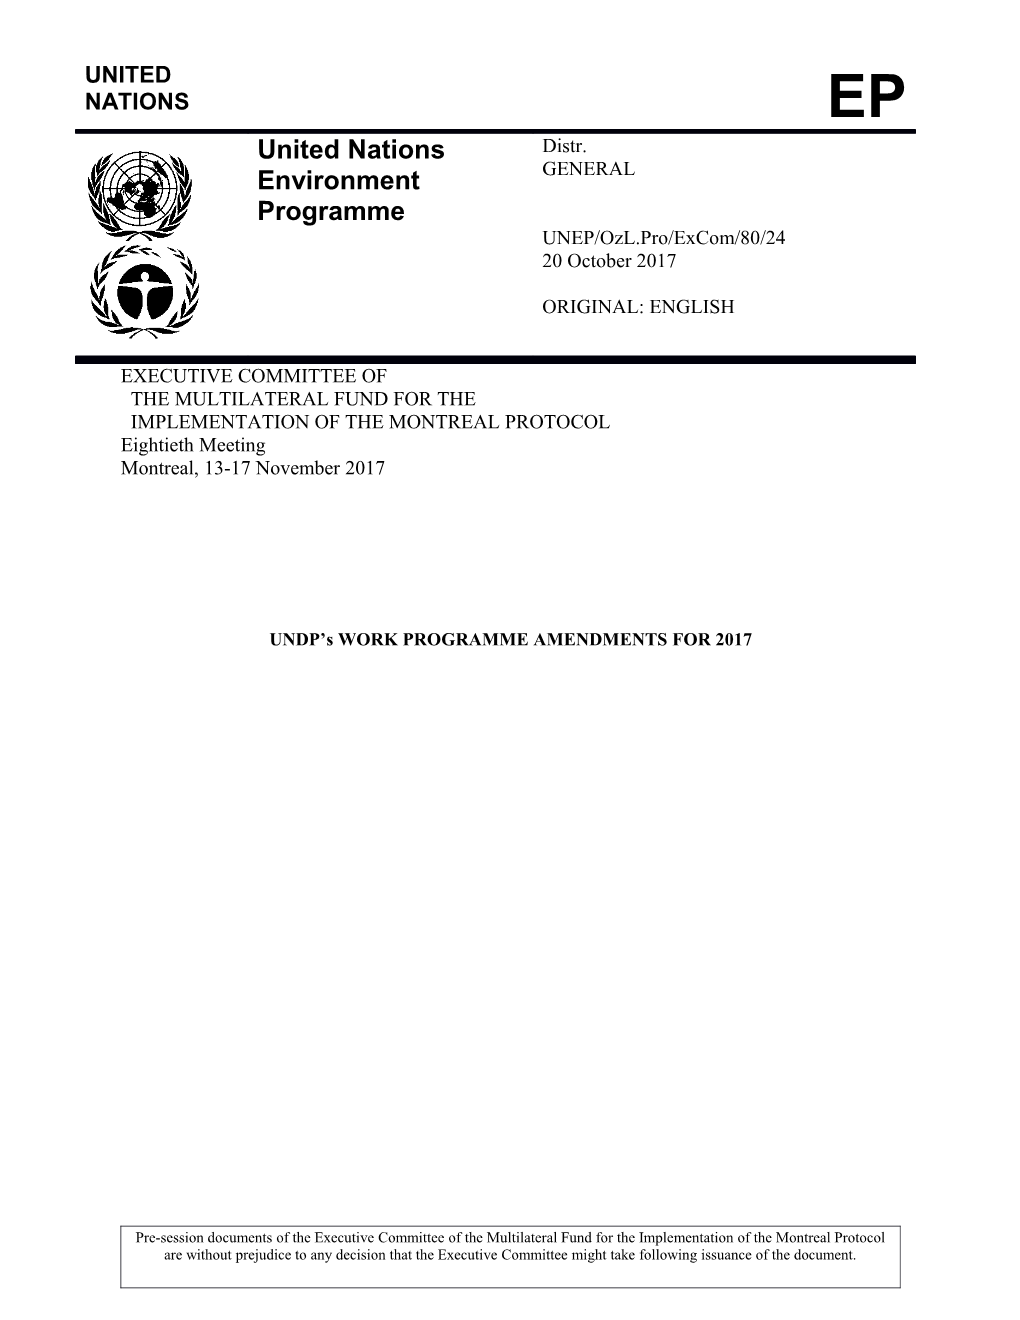 UNDP's Work Programme Amendments for 2017